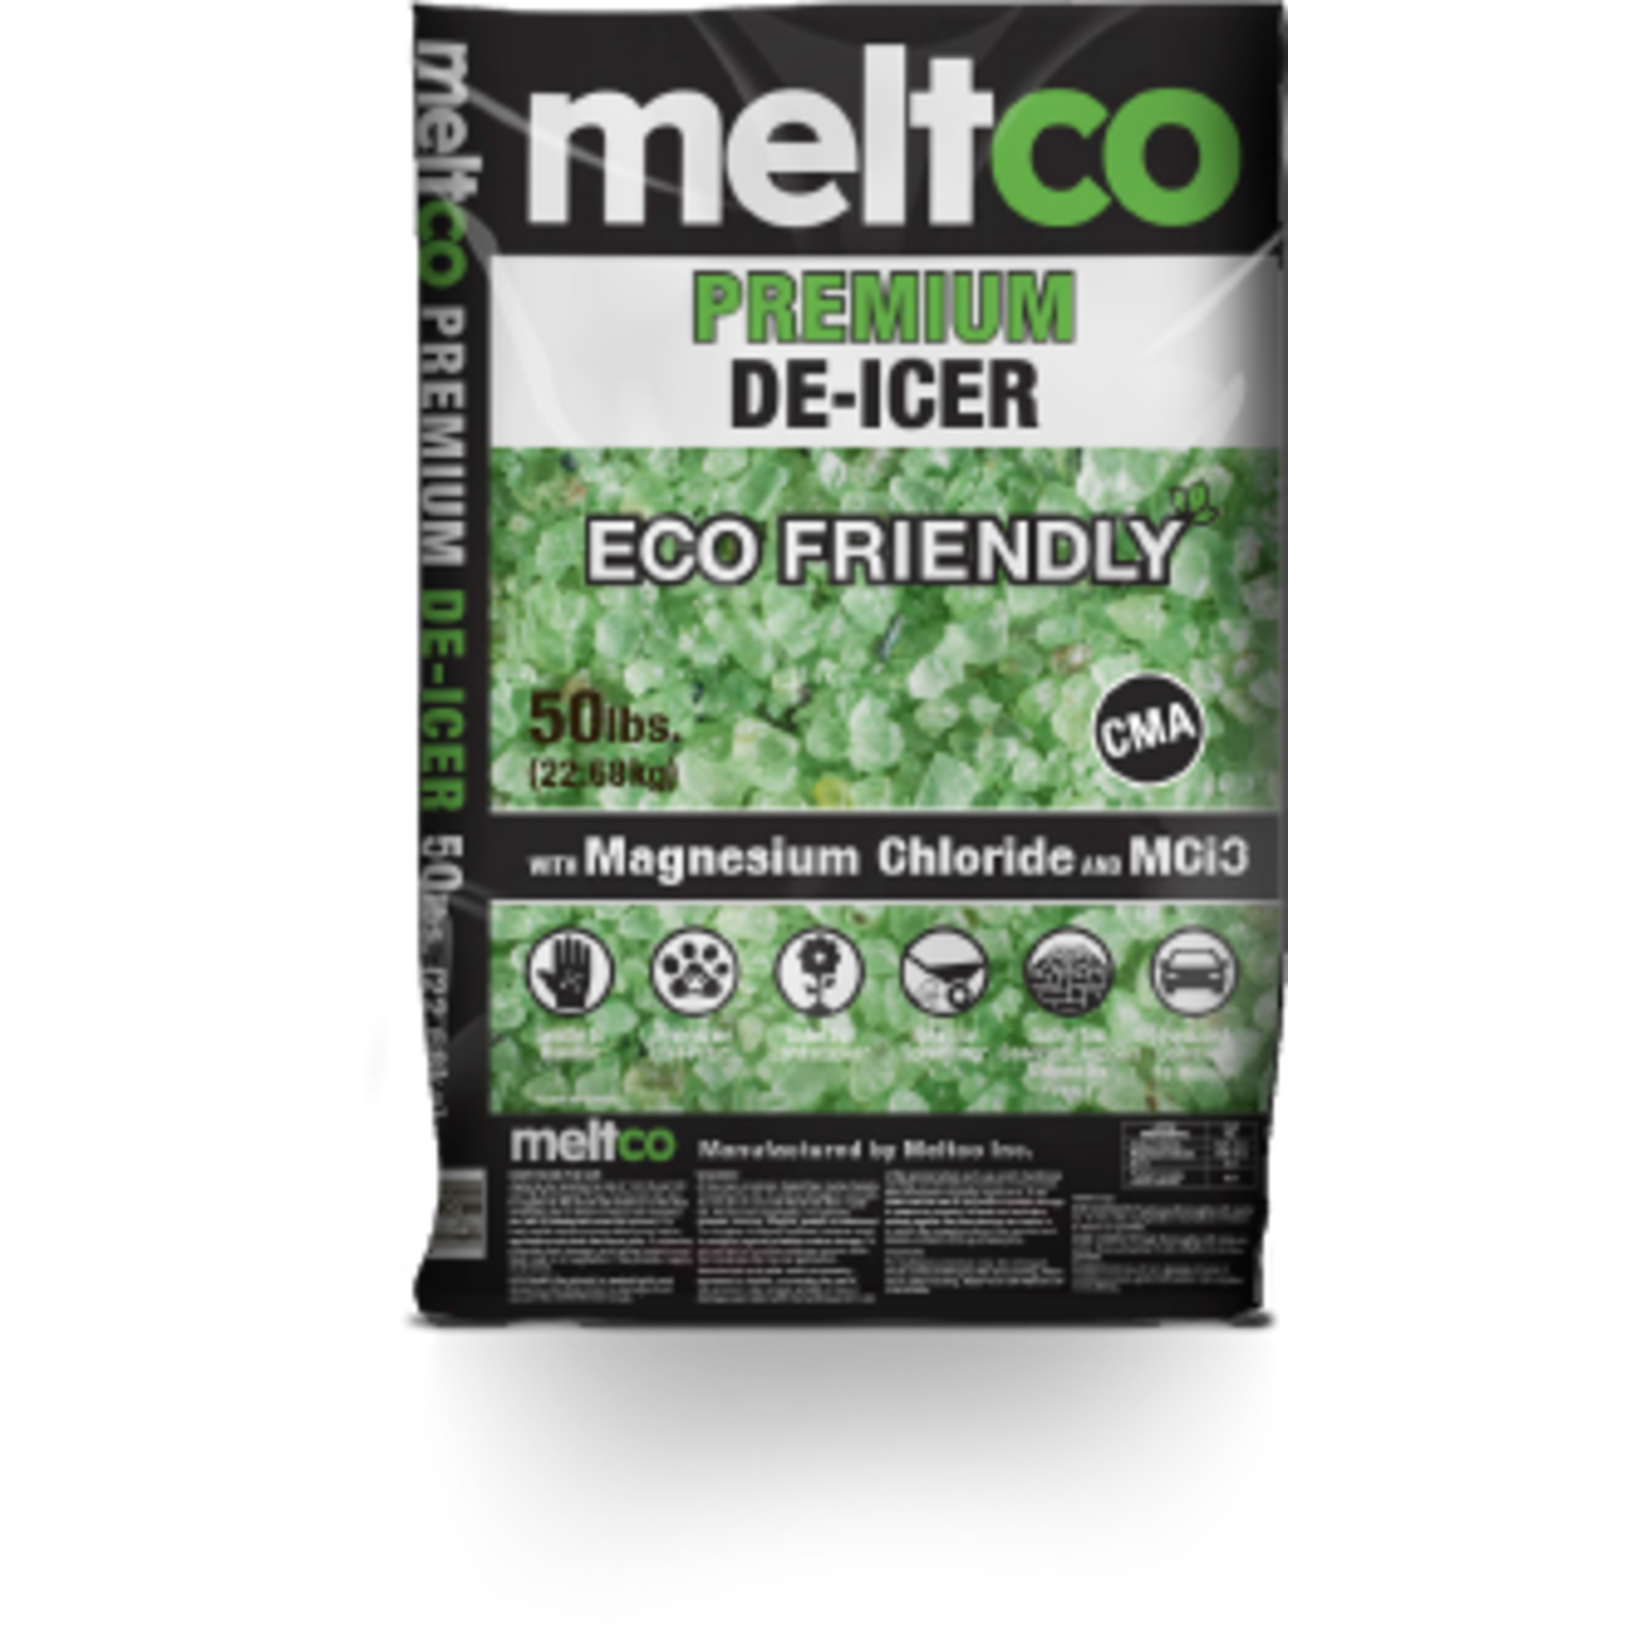 Meltco Pallet (49, 50# Bags) of Meltco Premium De-Icer